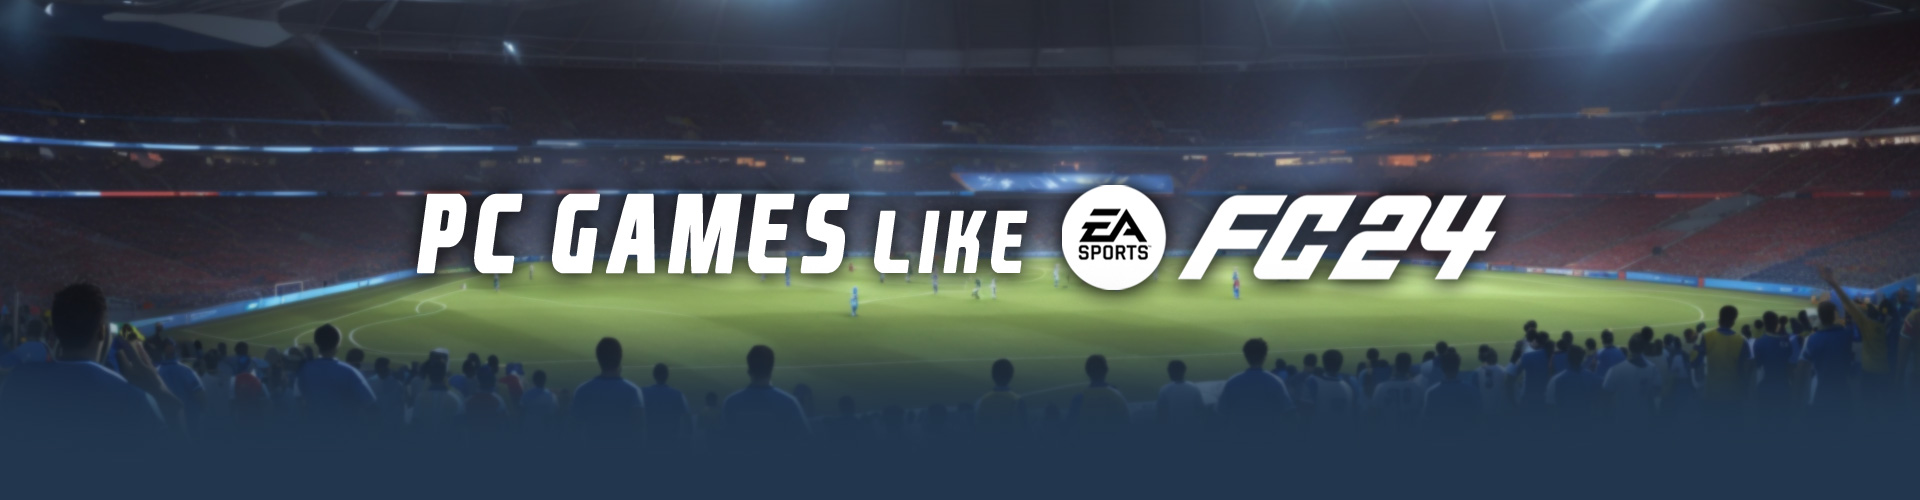 PC Games like EA Sports FC 24